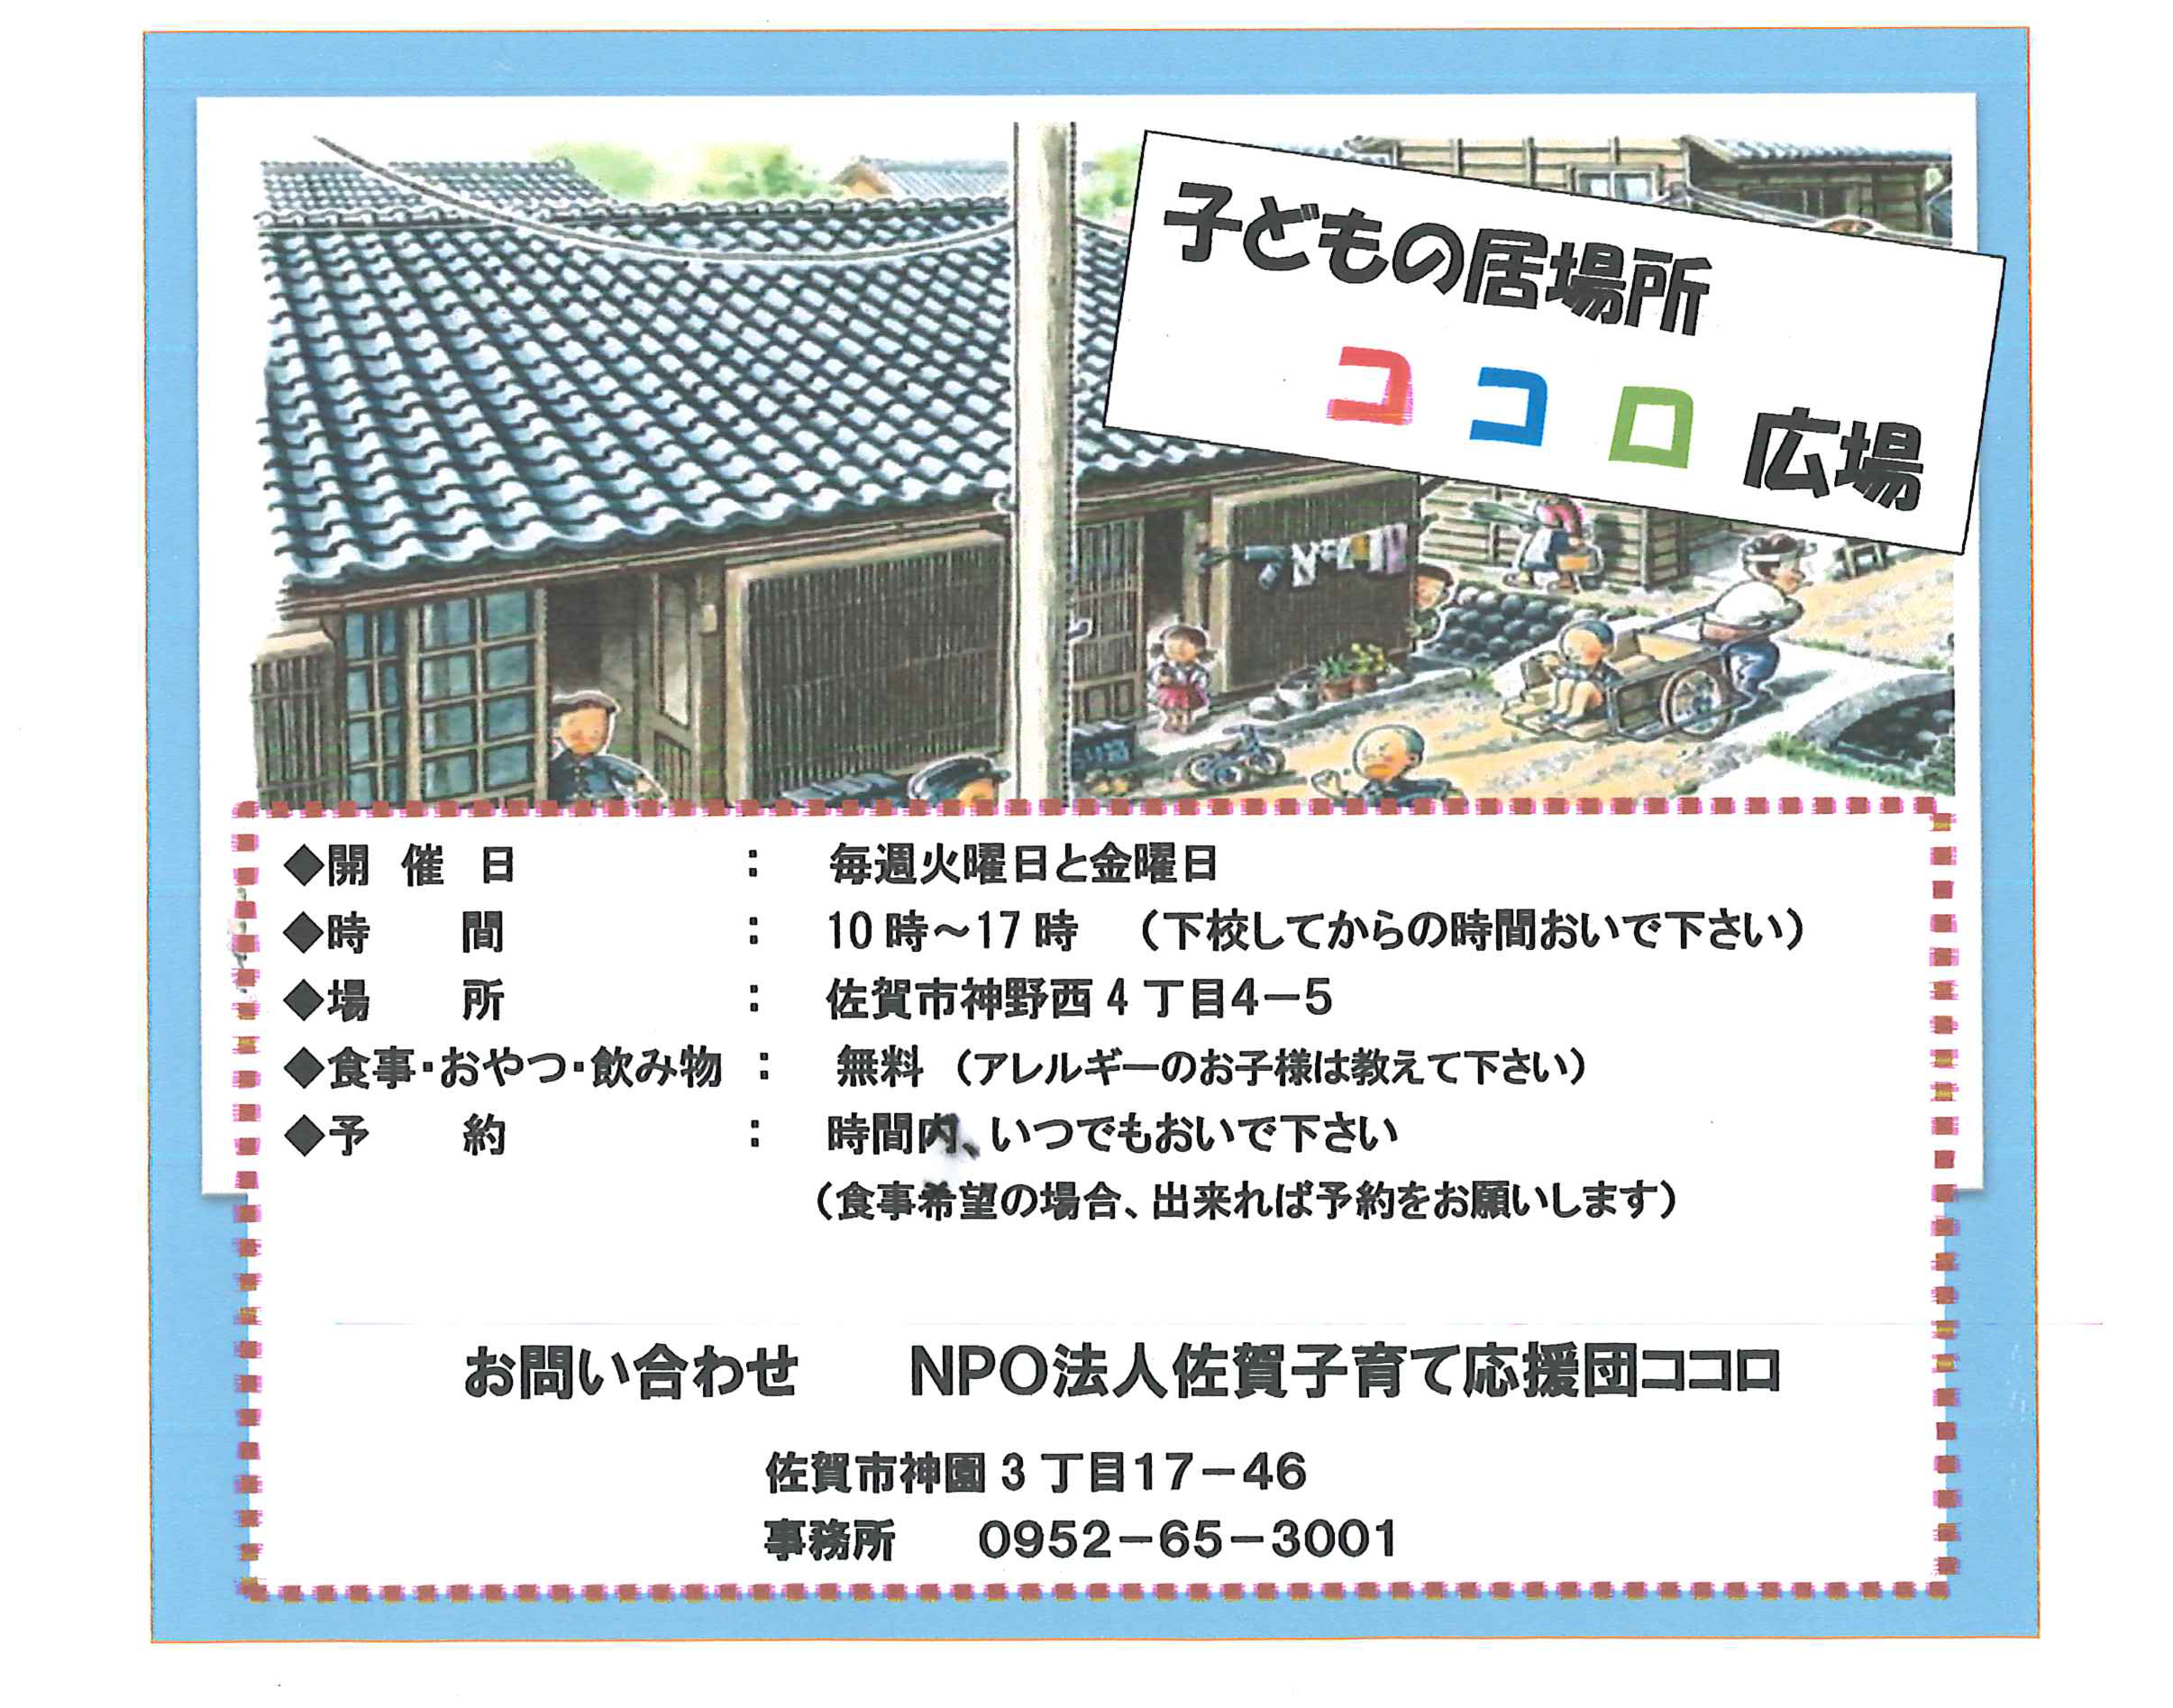 https://www.tsunasaga.jp/plaza/news/img/20190628193909845_Part1.png